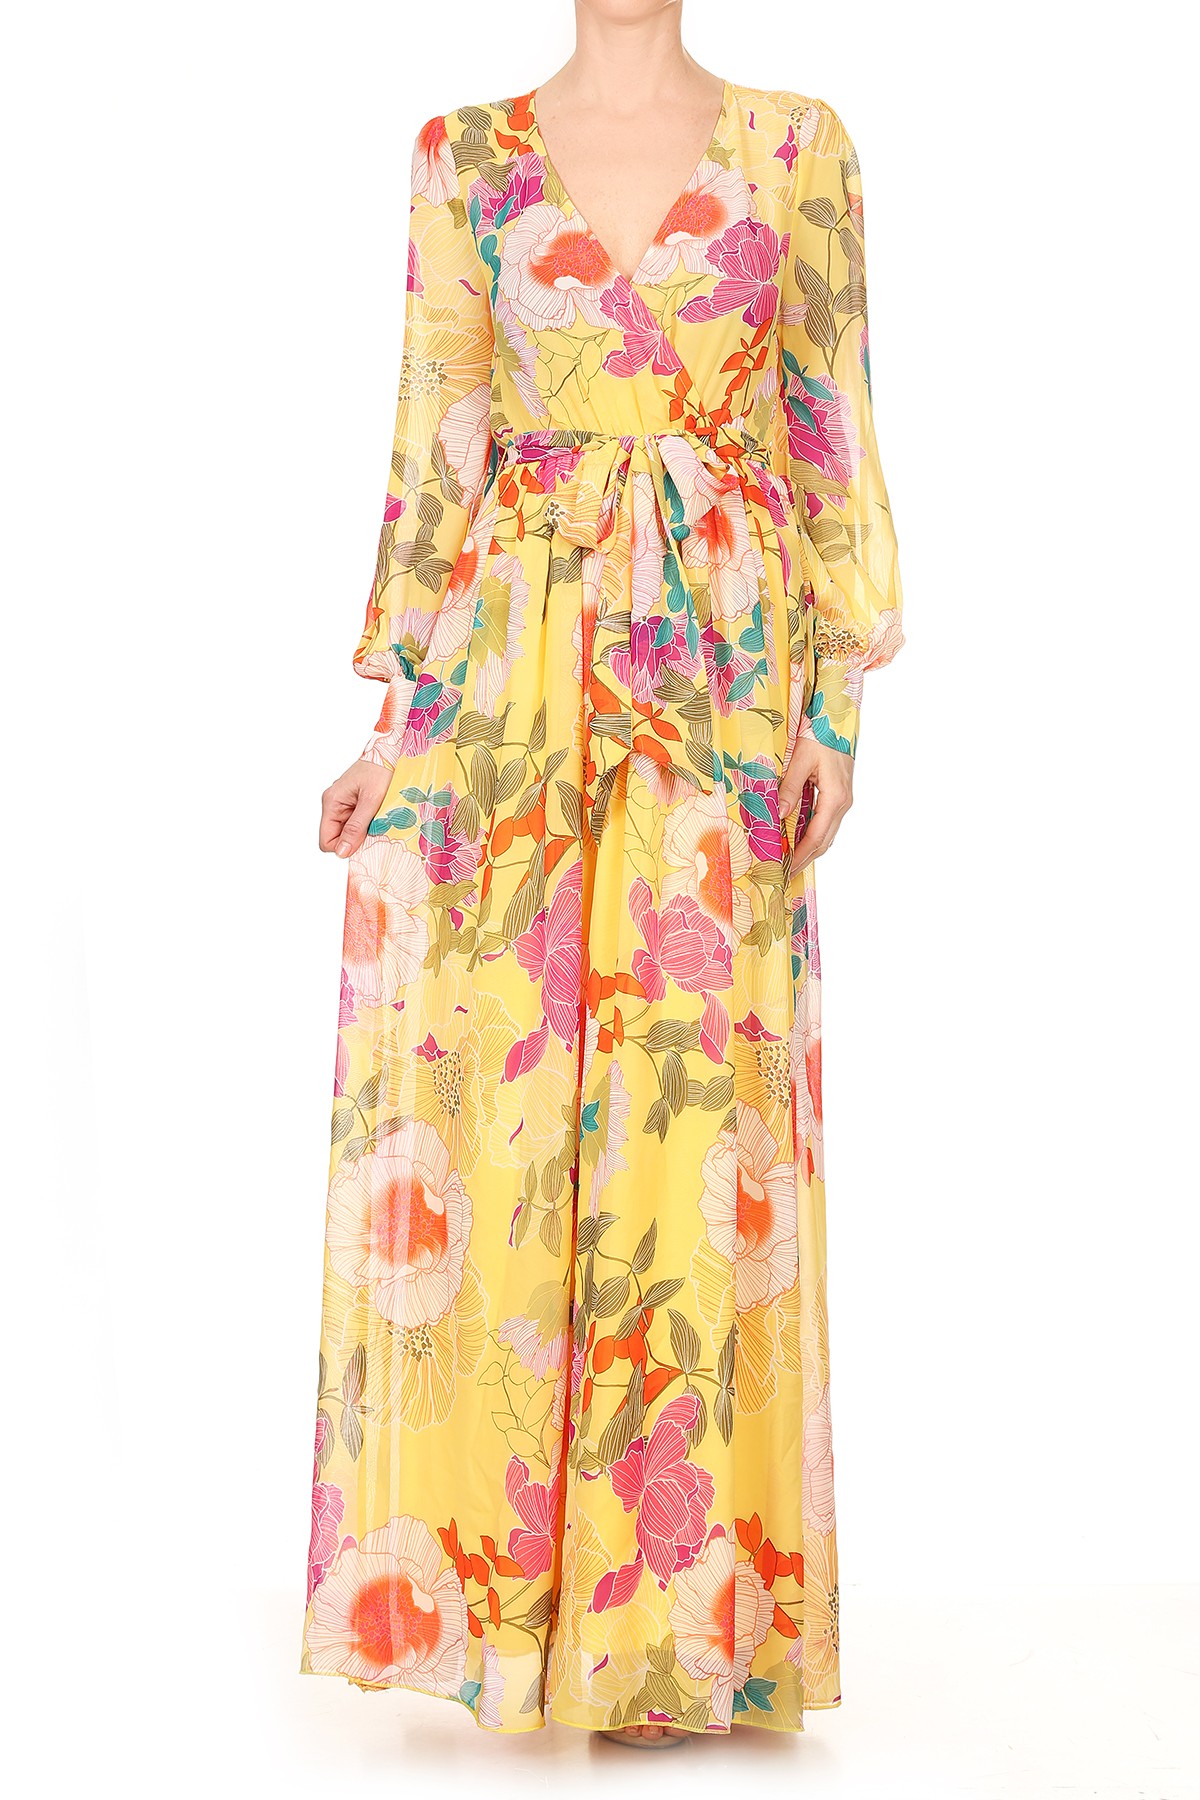 yellow floral dress maxi